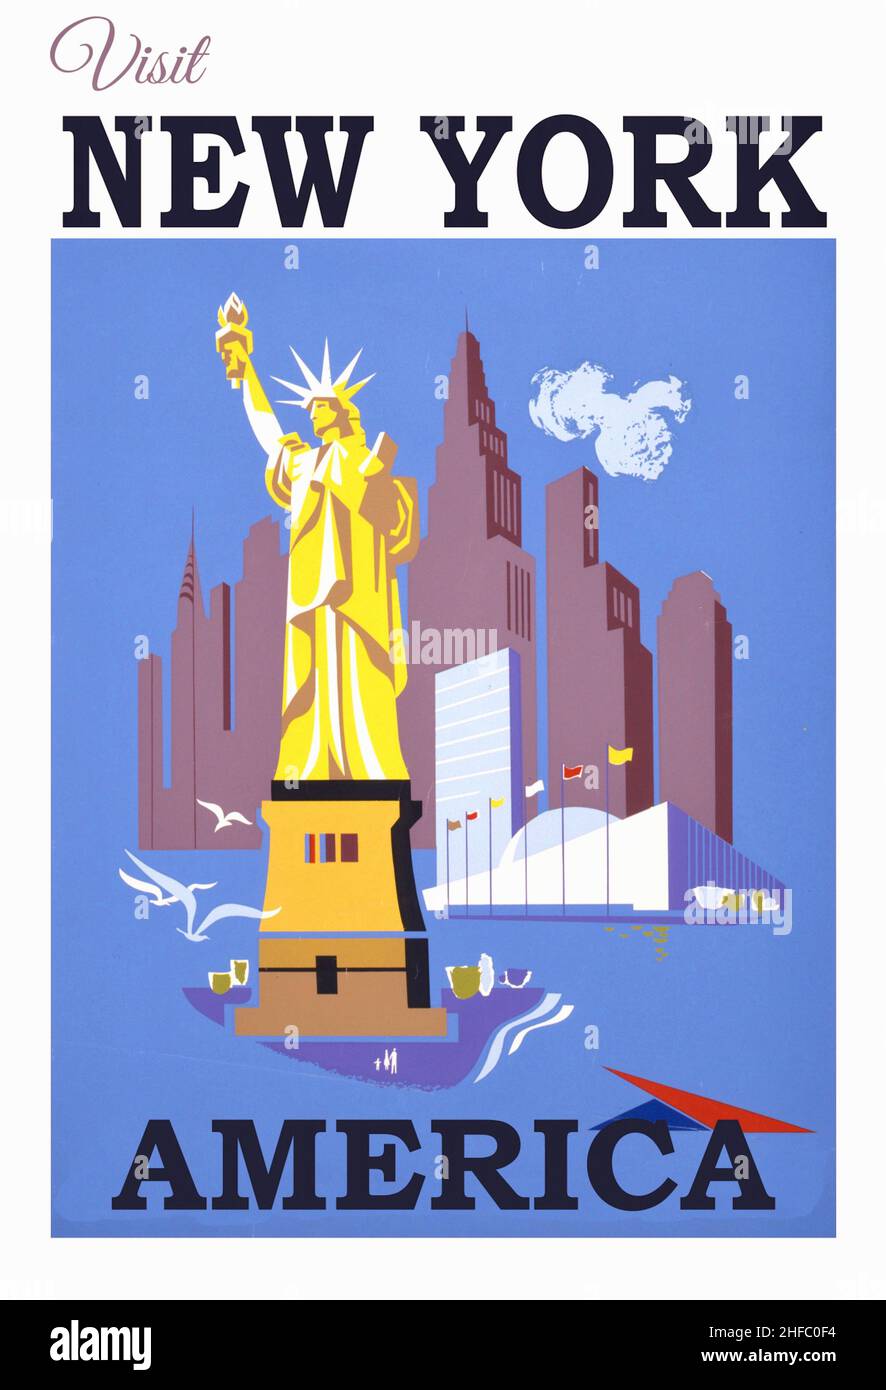 Visit New York travel poster Stock Photo